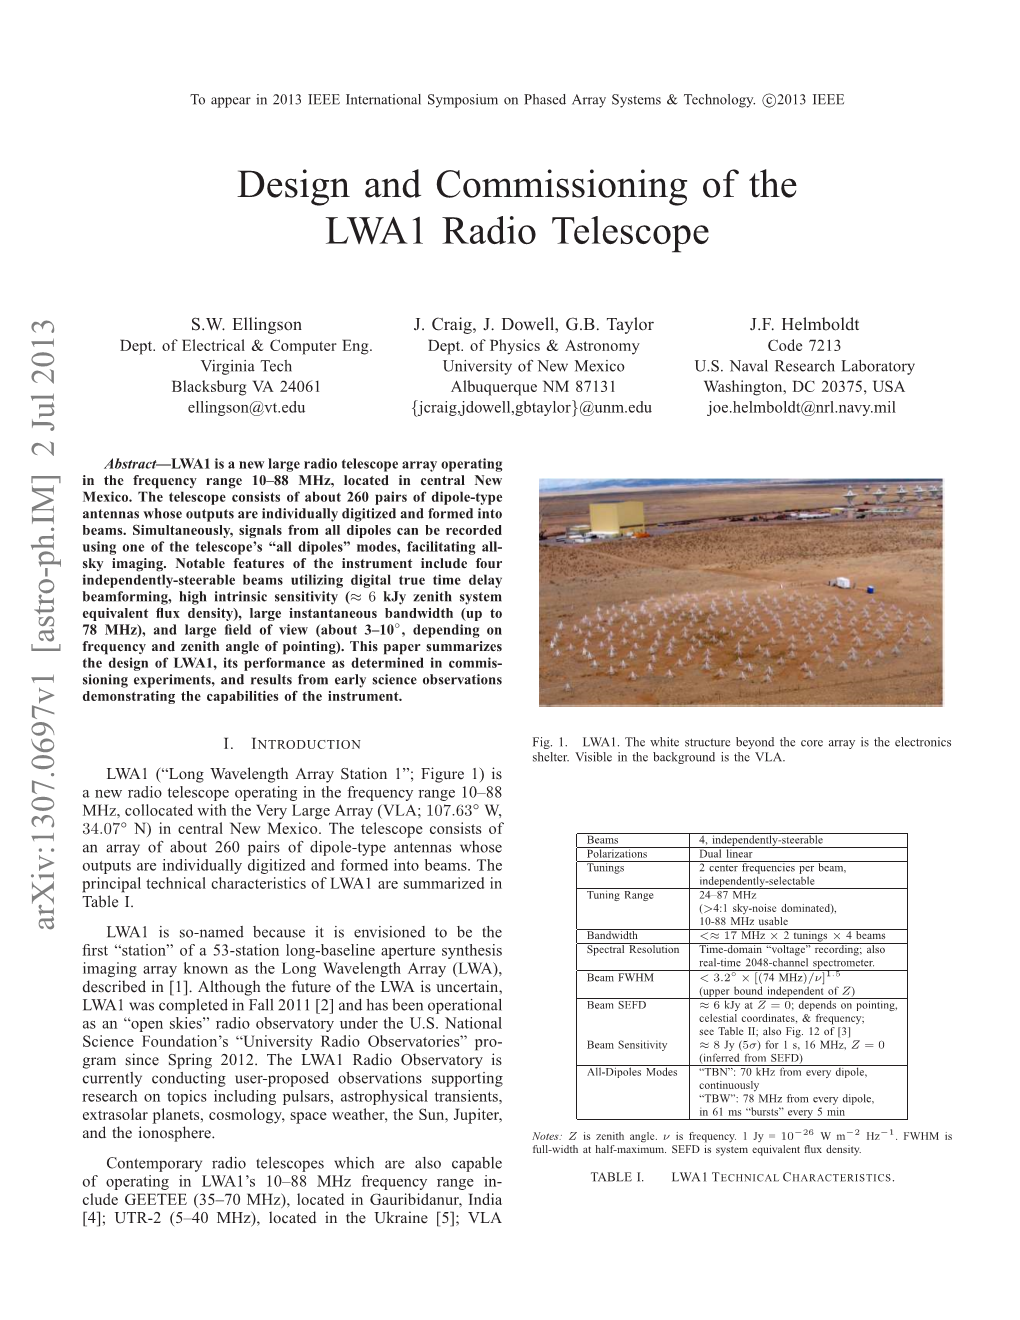 Design and Commissioning of the LWA1 Radio Telescope